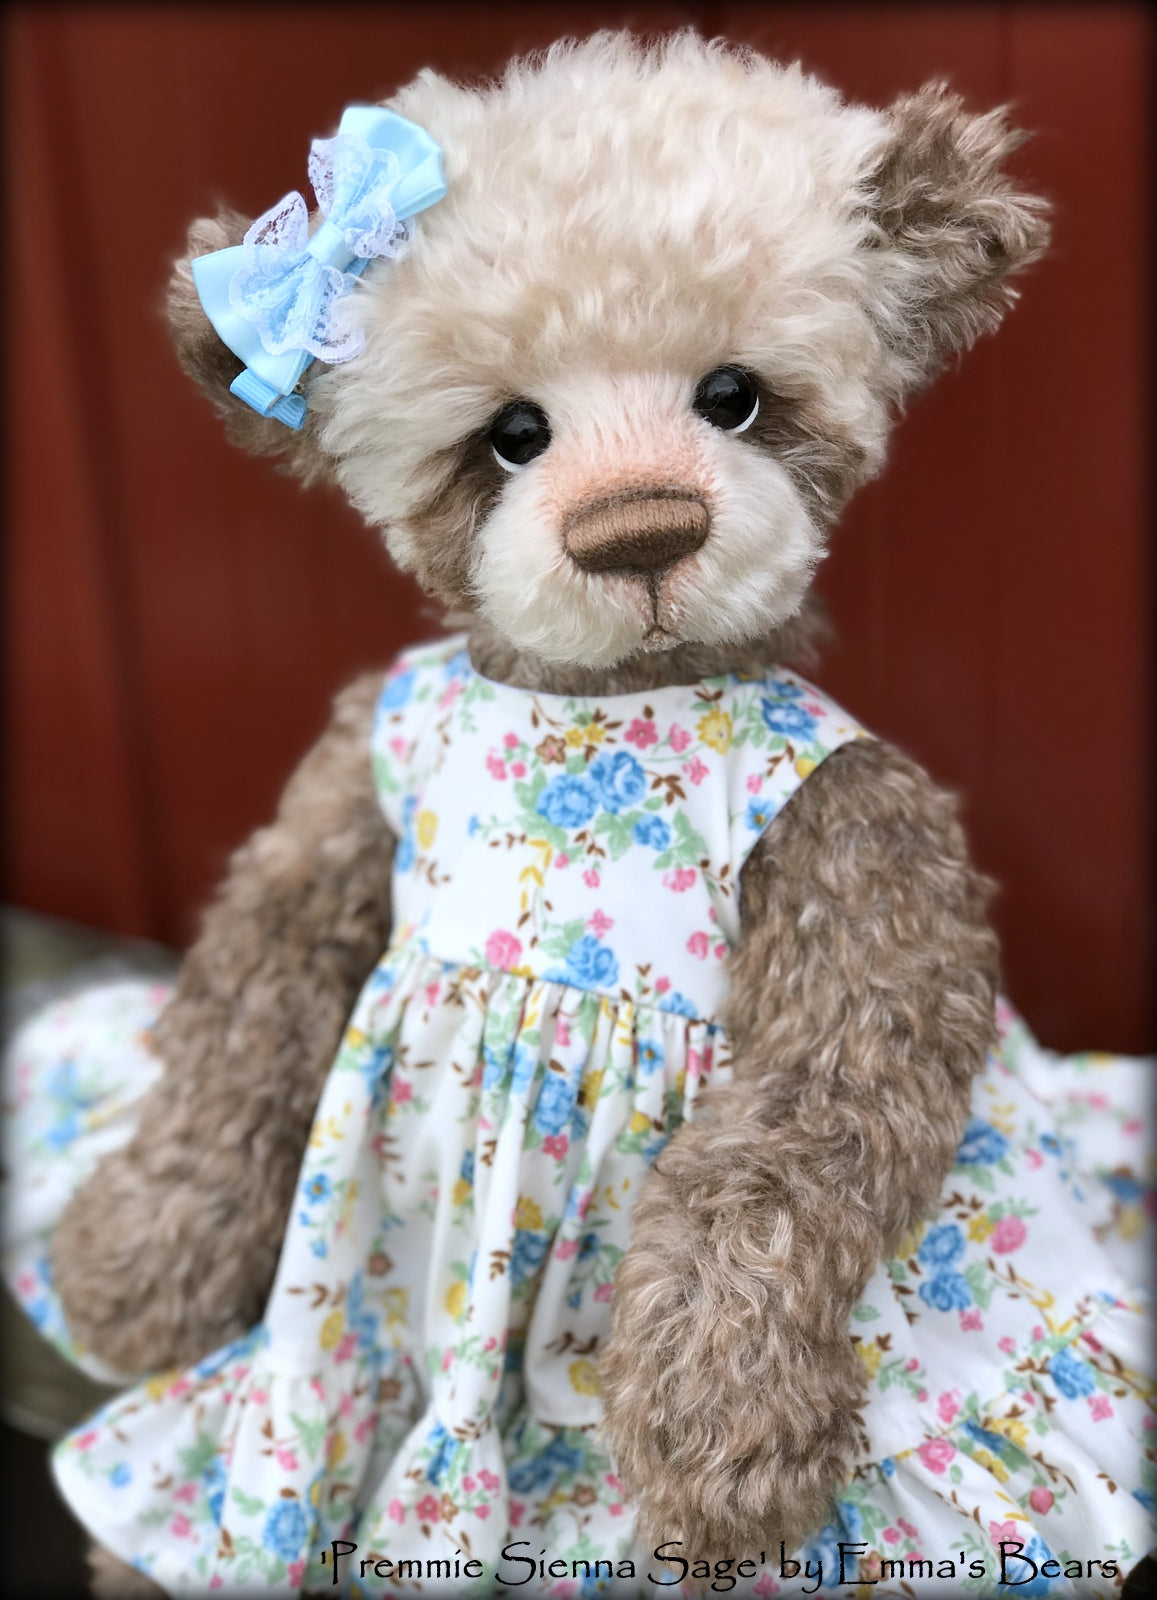 Premmie Sienna Sage - 16in hand dyed MOHAIR Artist baby style Bear by Emmas Bears - OOAK